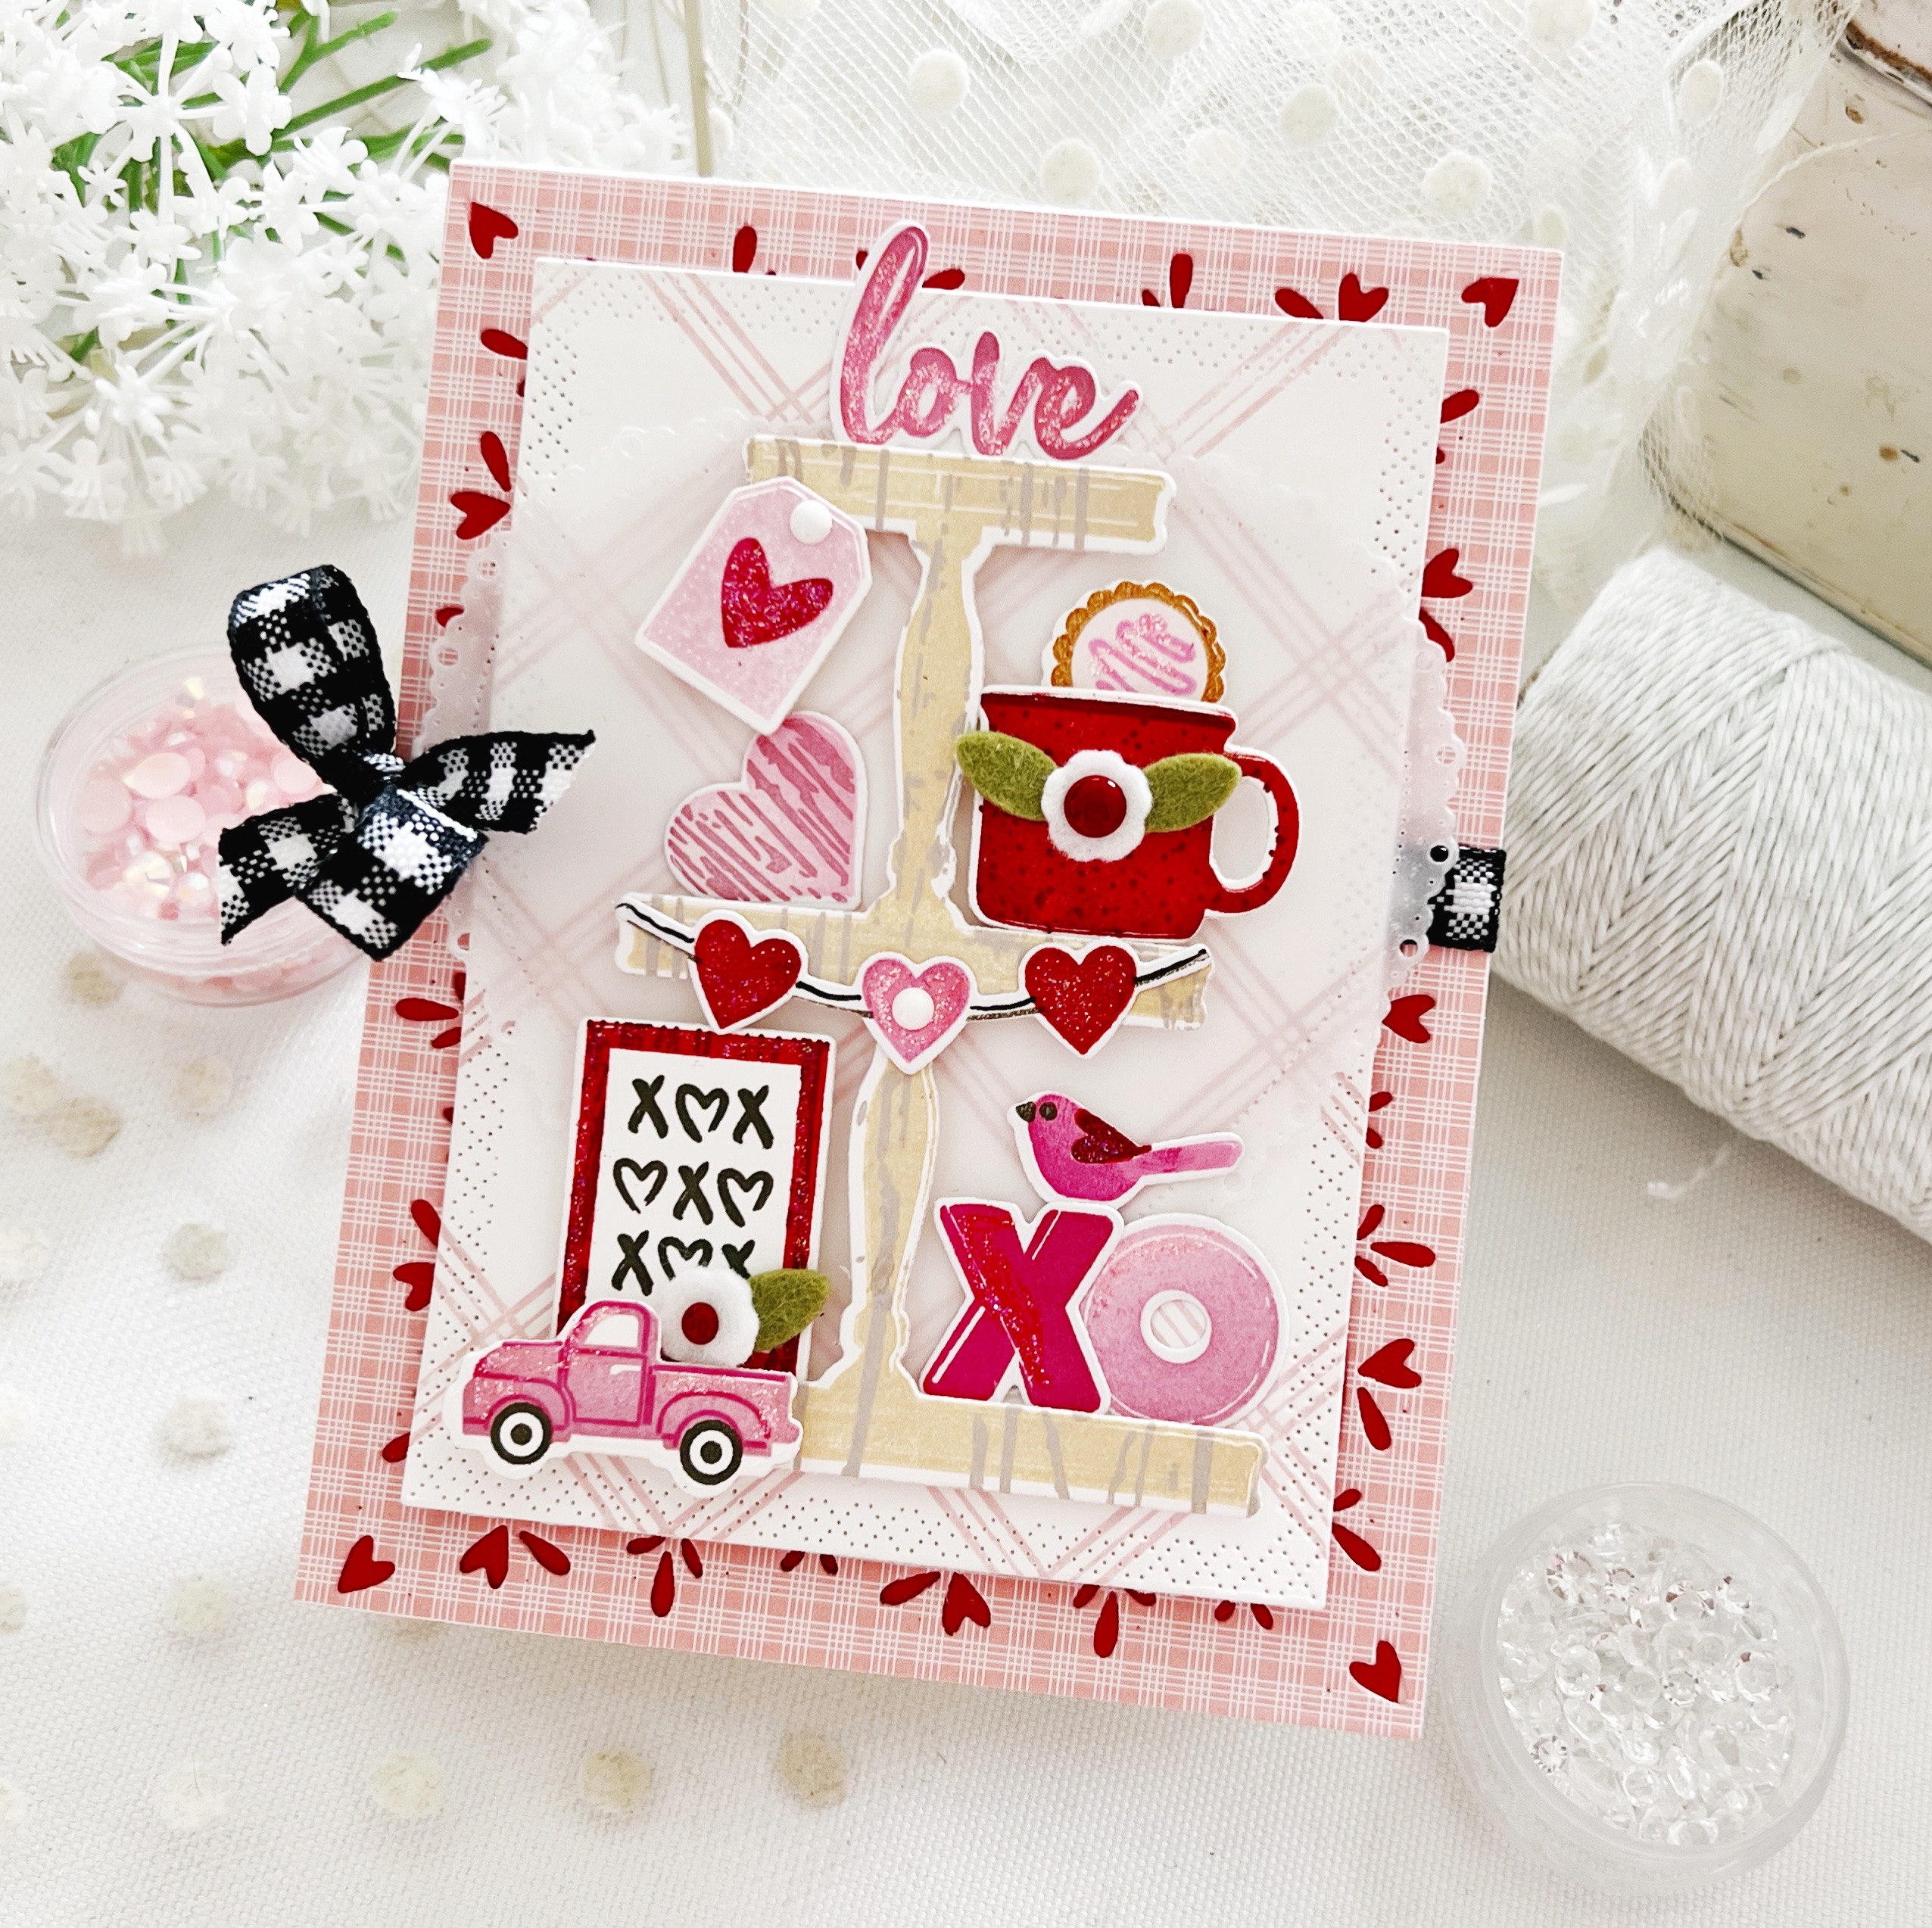 Tiers of Cheer: Valentine Mini Stamp Set